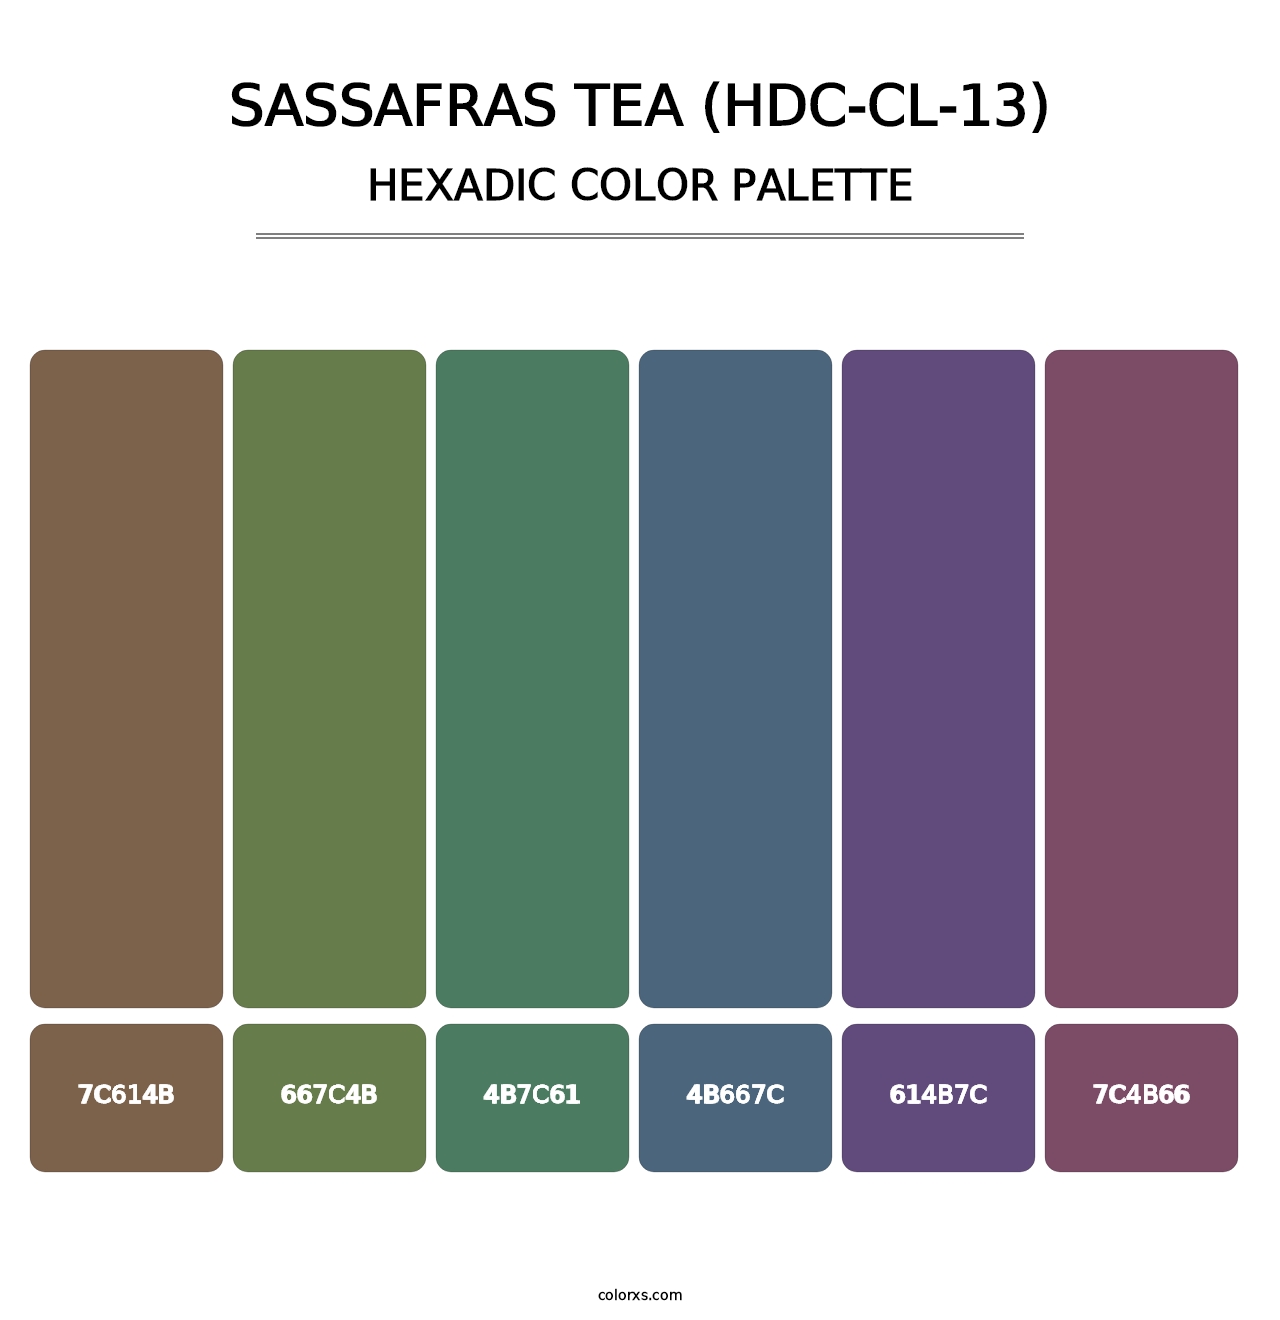 Sassafras Tea (HDC-CL-13) - Hexadic Color Palette